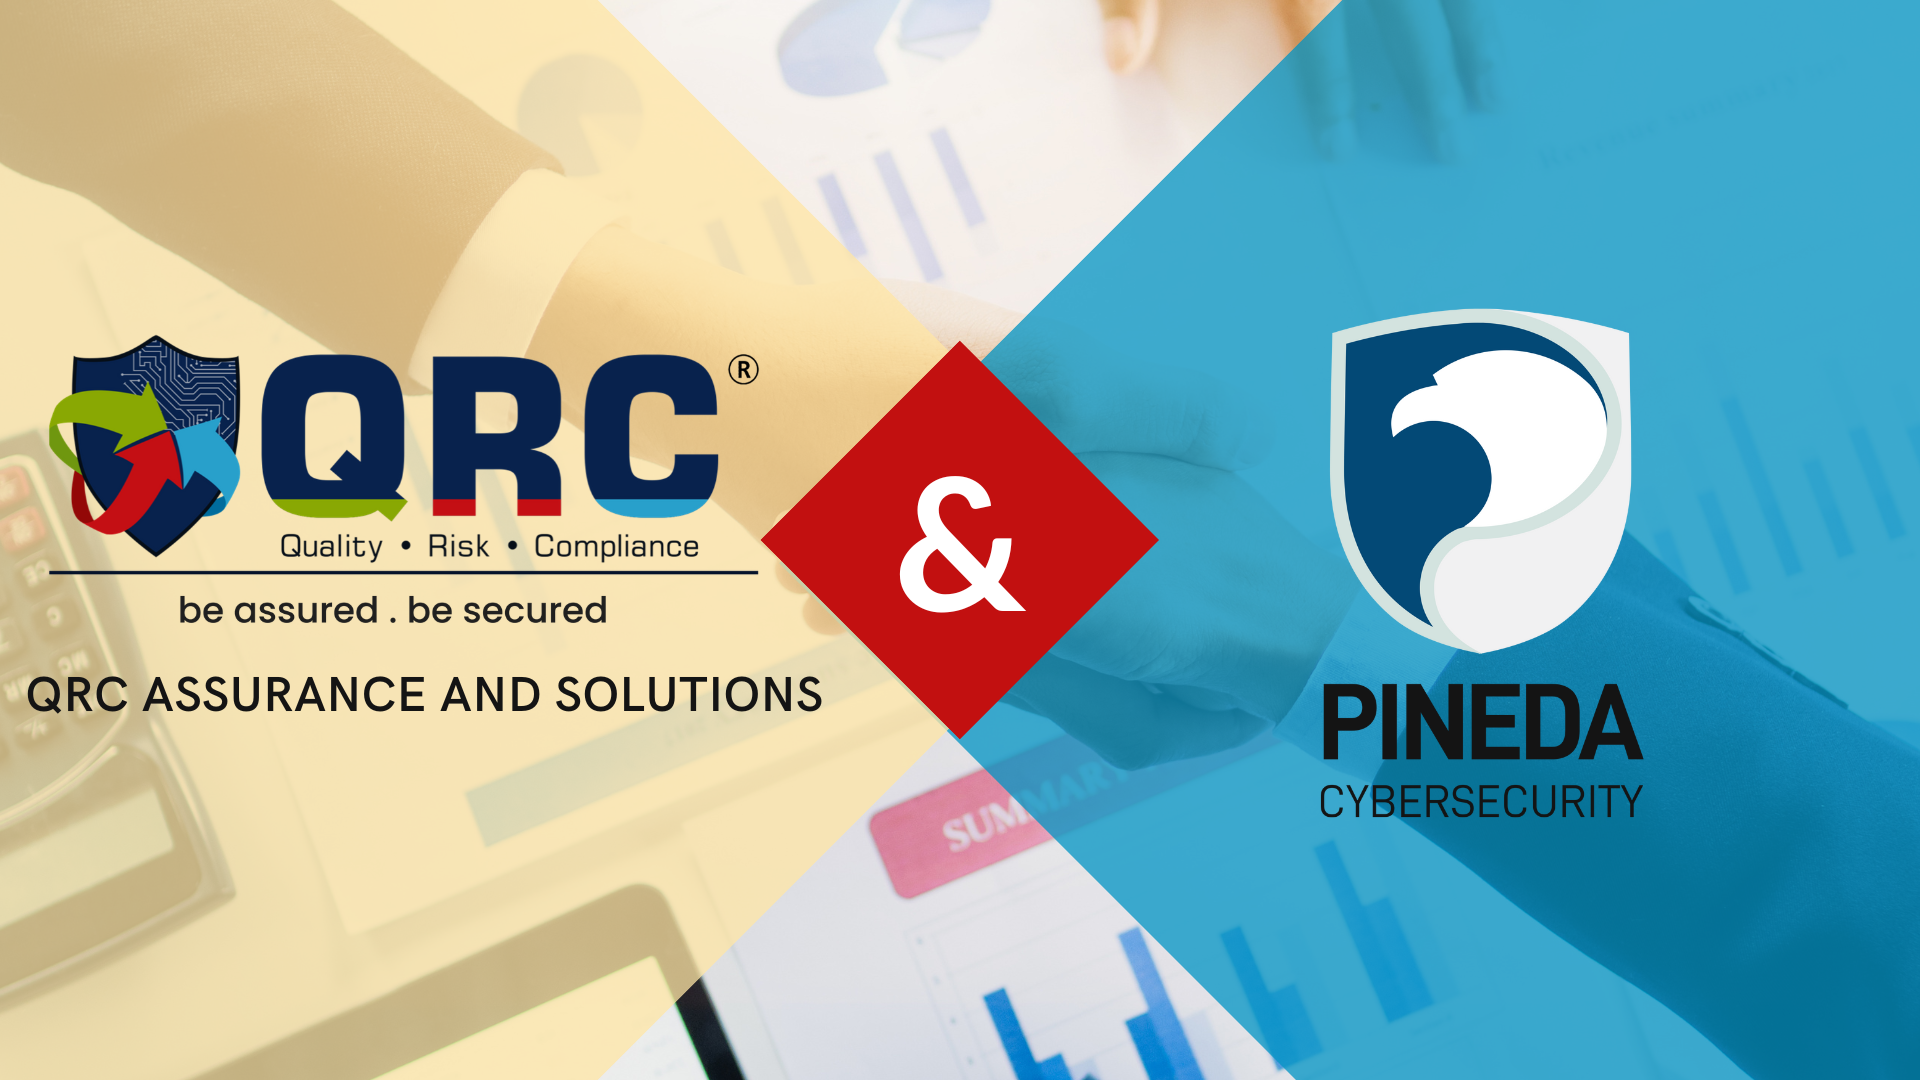 QRC Assurance x Pineda Cybersecurity announce partnership